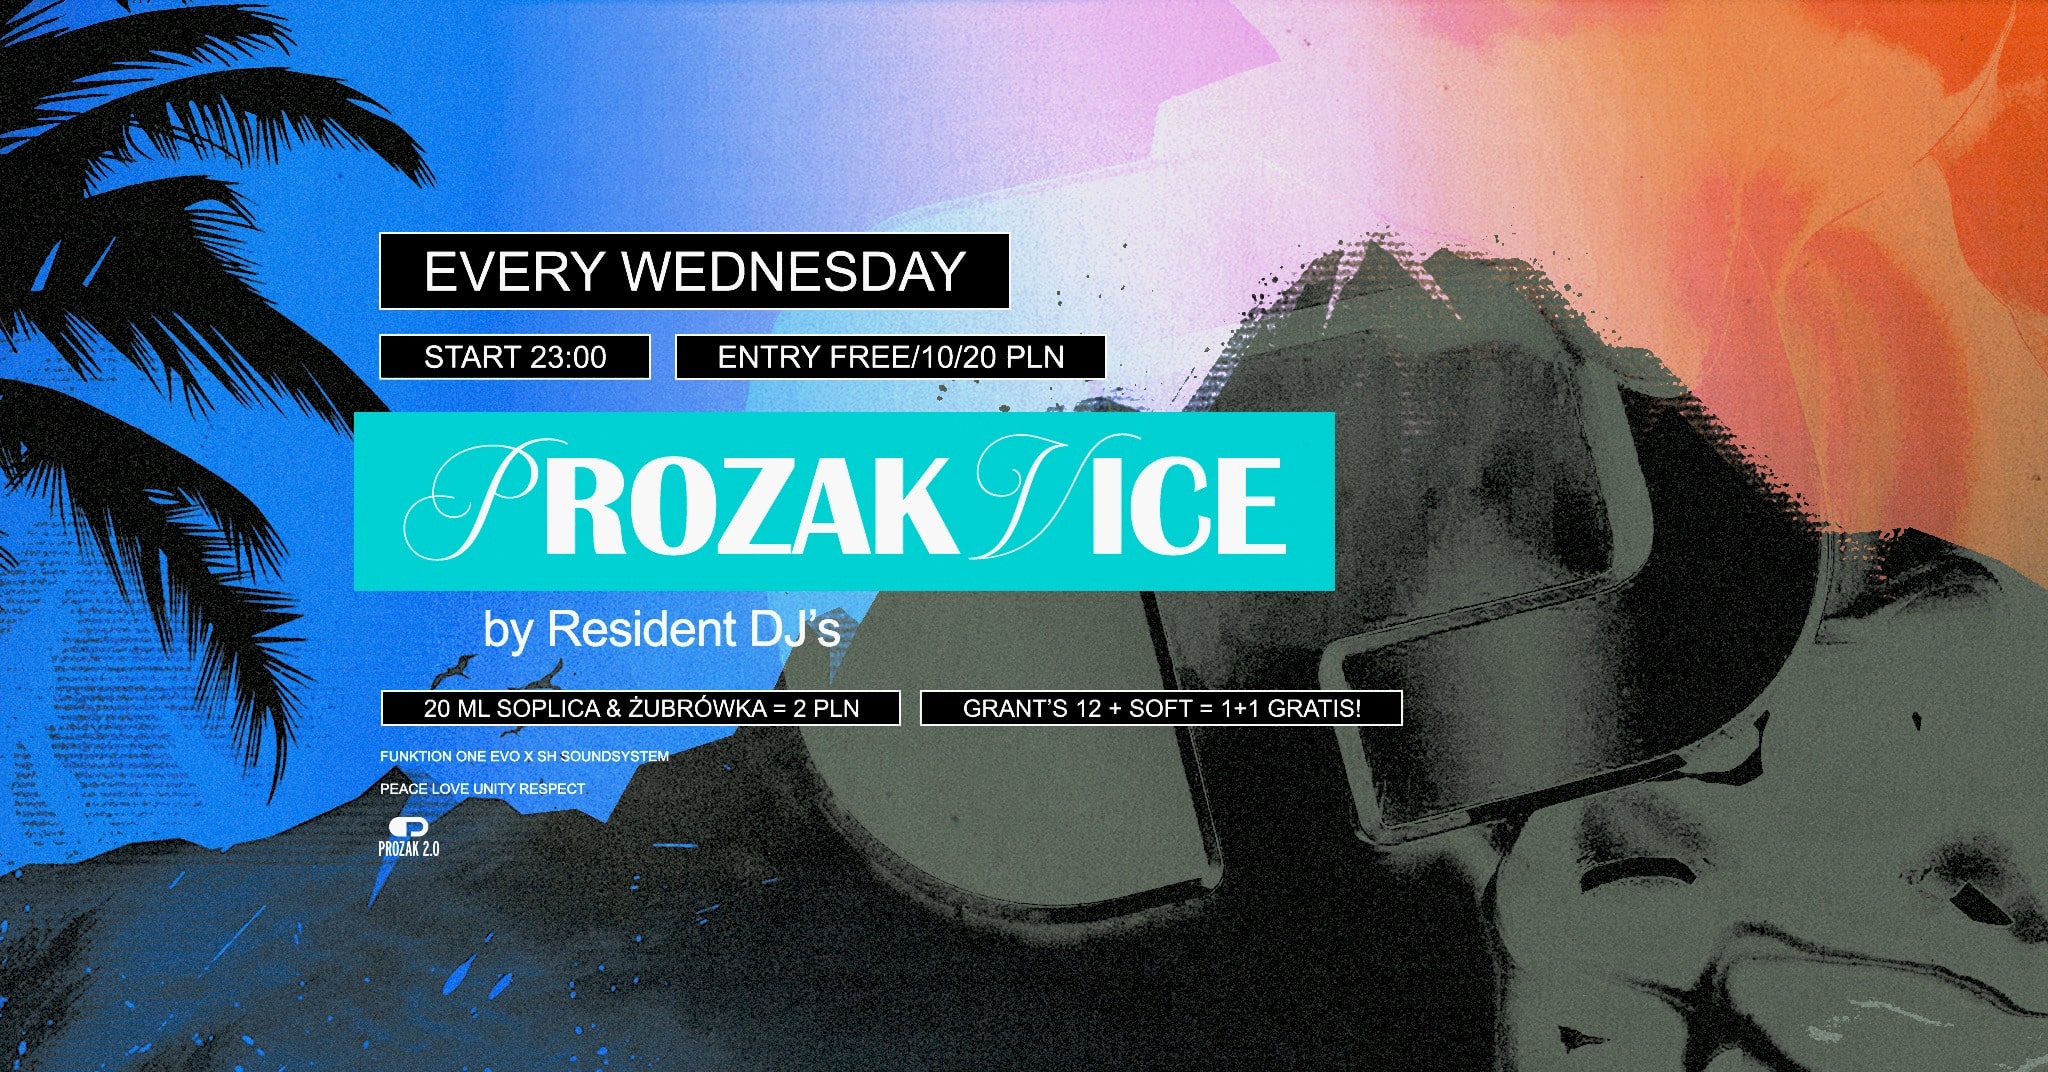 Prozak Vice: Every Wednesday at Prozak 2.0